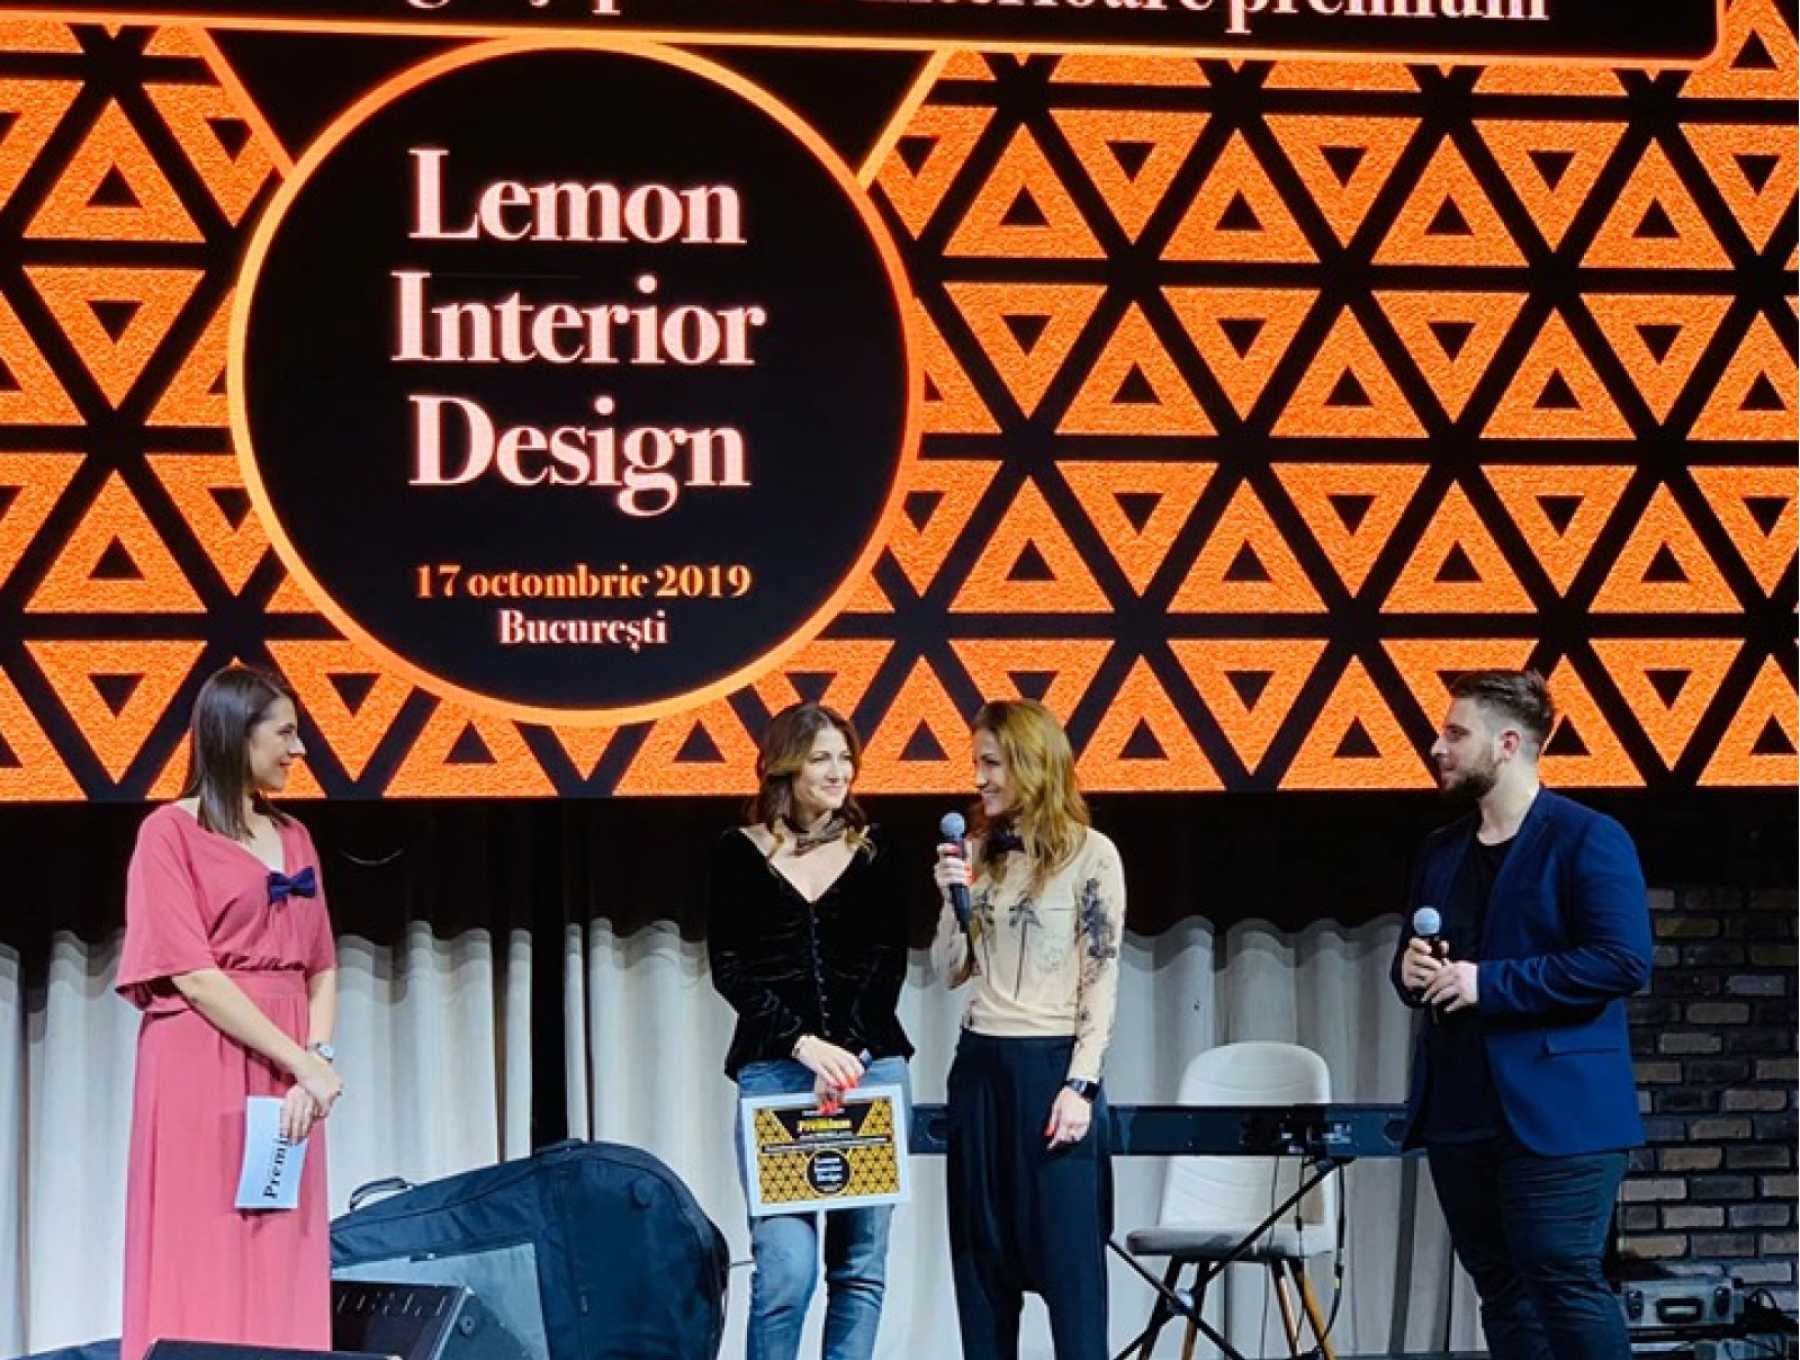 Lemon Interior Design was awarded at ZF După Afaceri Premium Gala